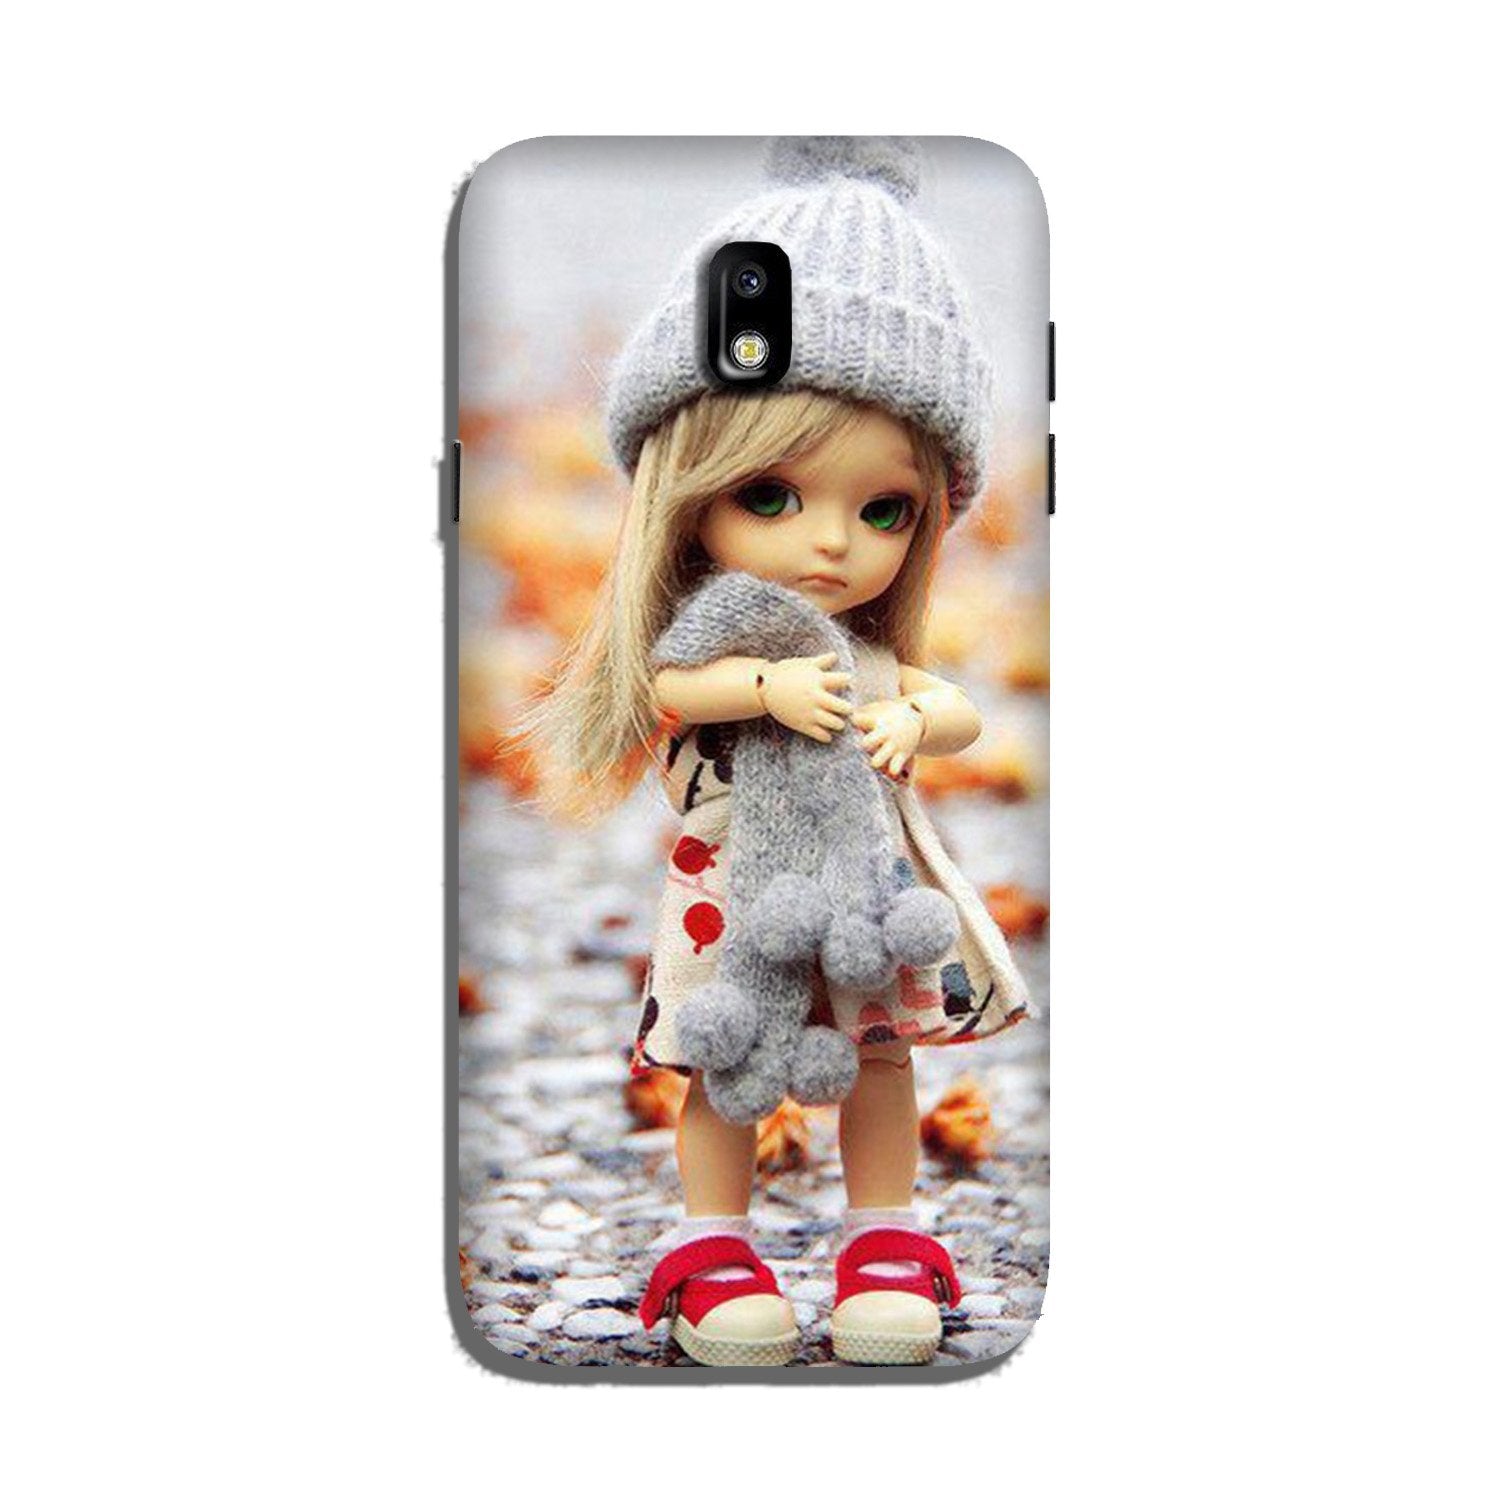 Cute Doll Case for Galaxy J5 Pro